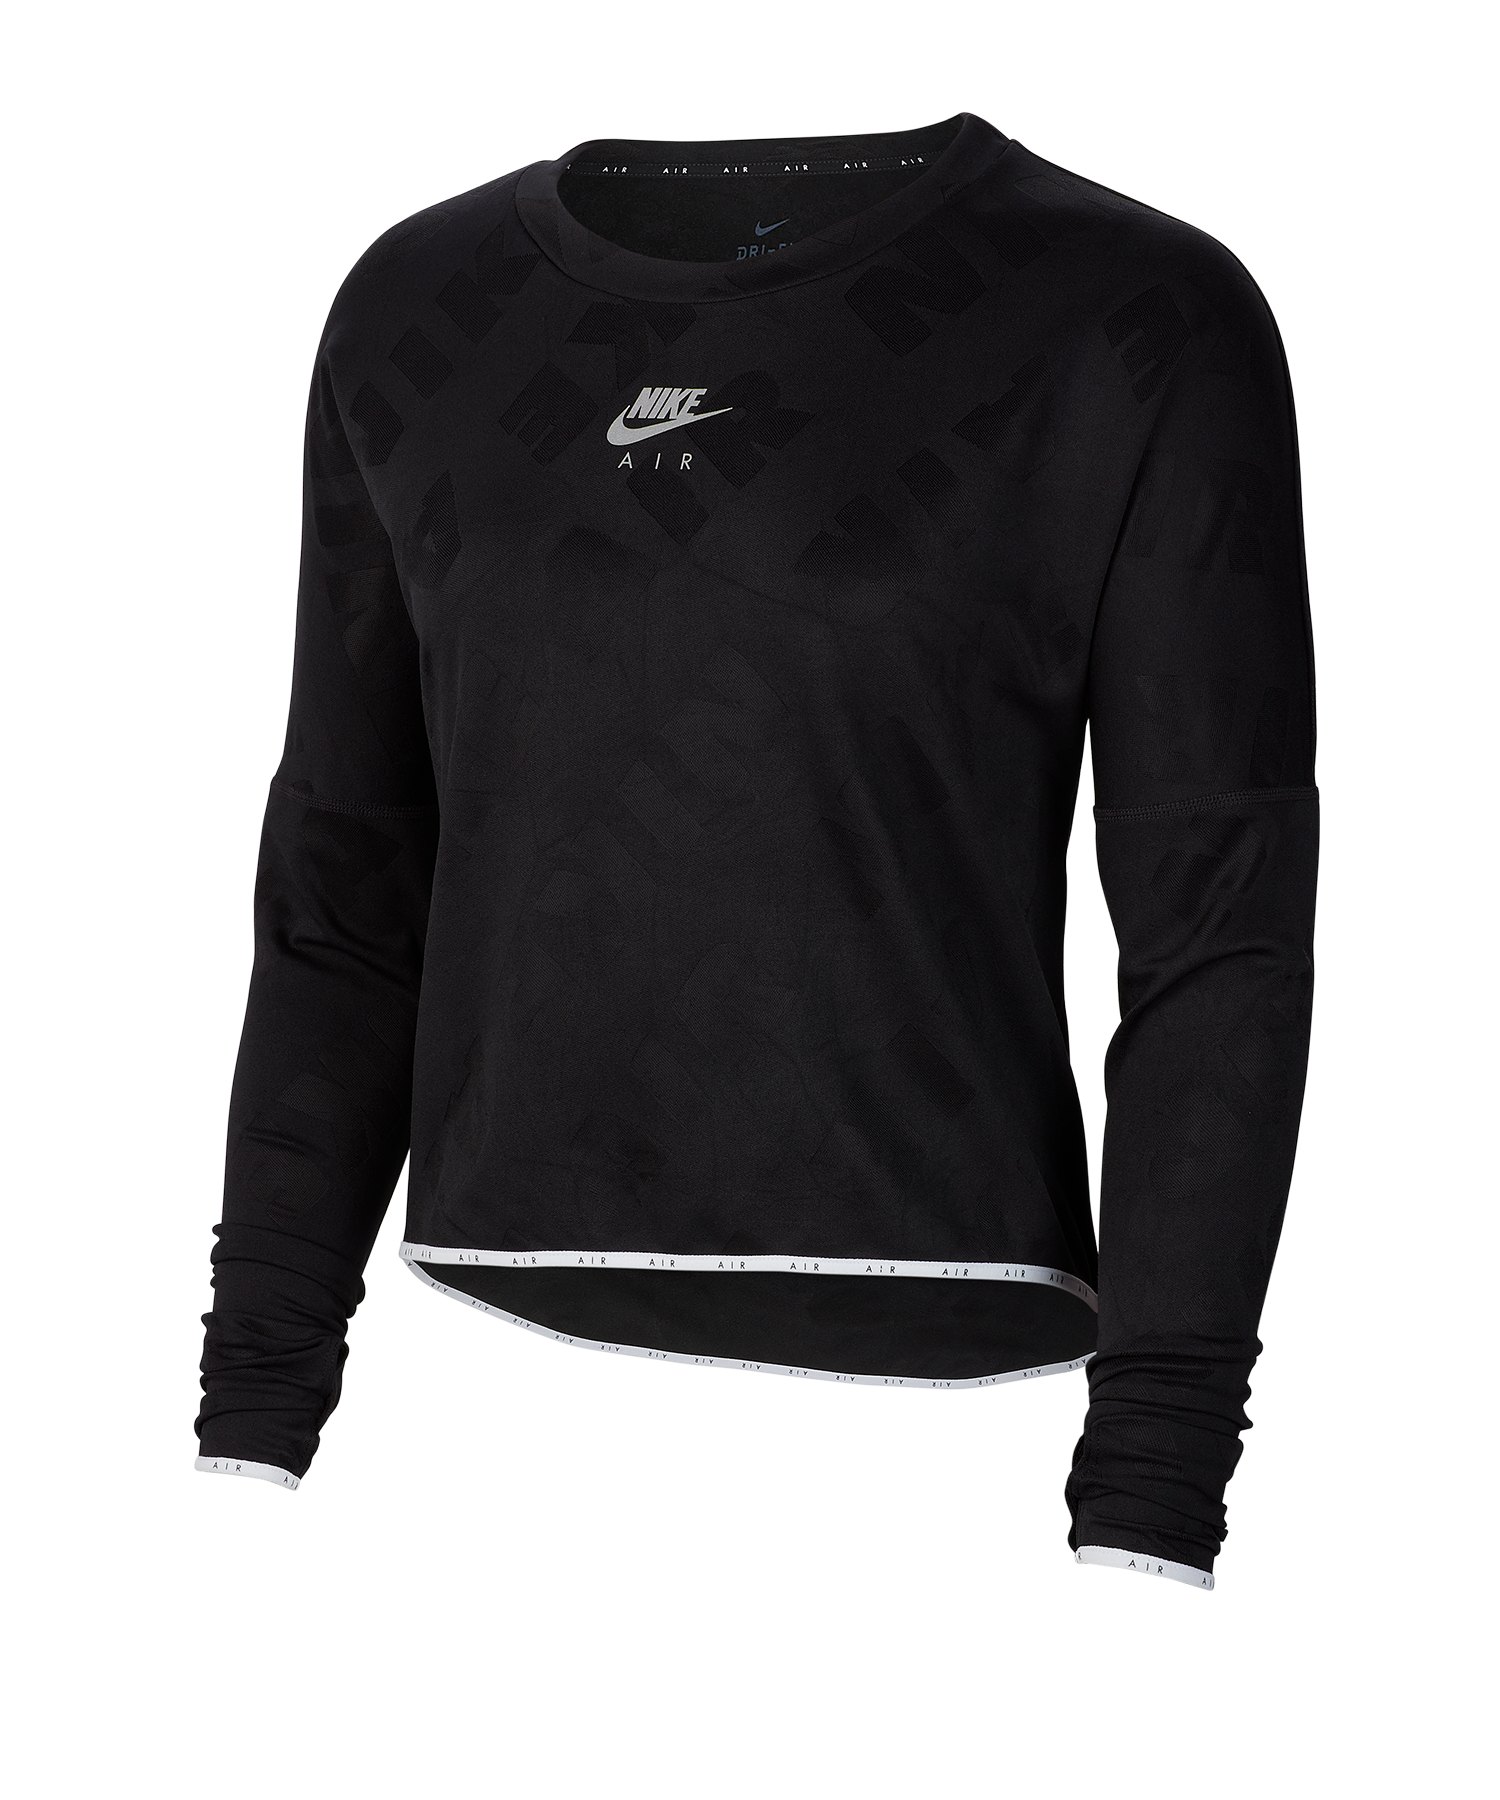 Nike Air Shirt Longsleve Damen Schwarz F010 - schwarz